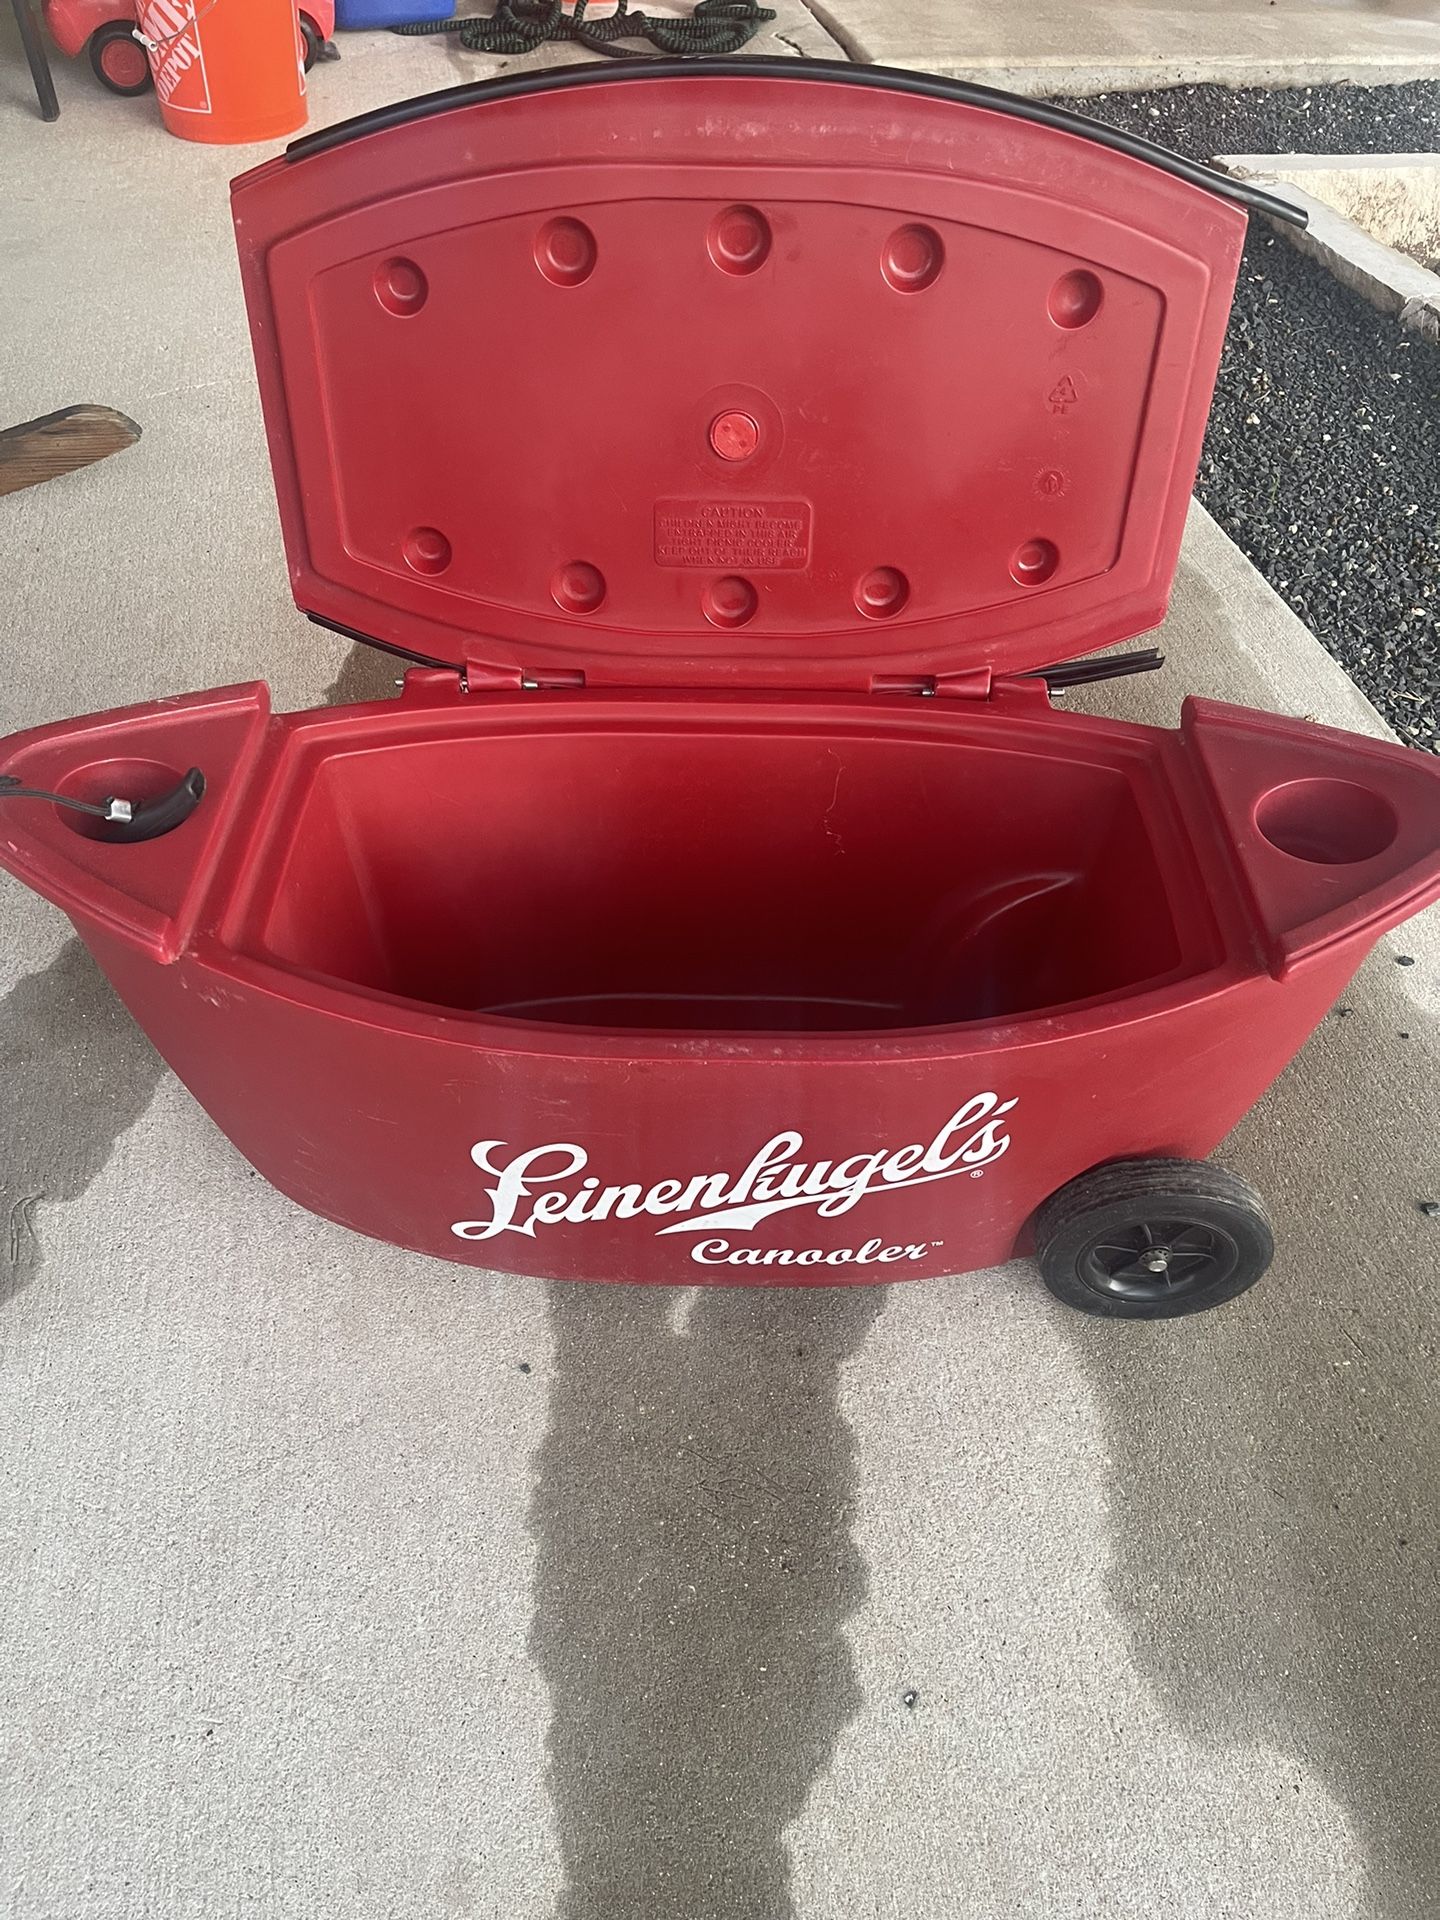 Leinenkugel’s Canoe Beer Cooler “Canooler